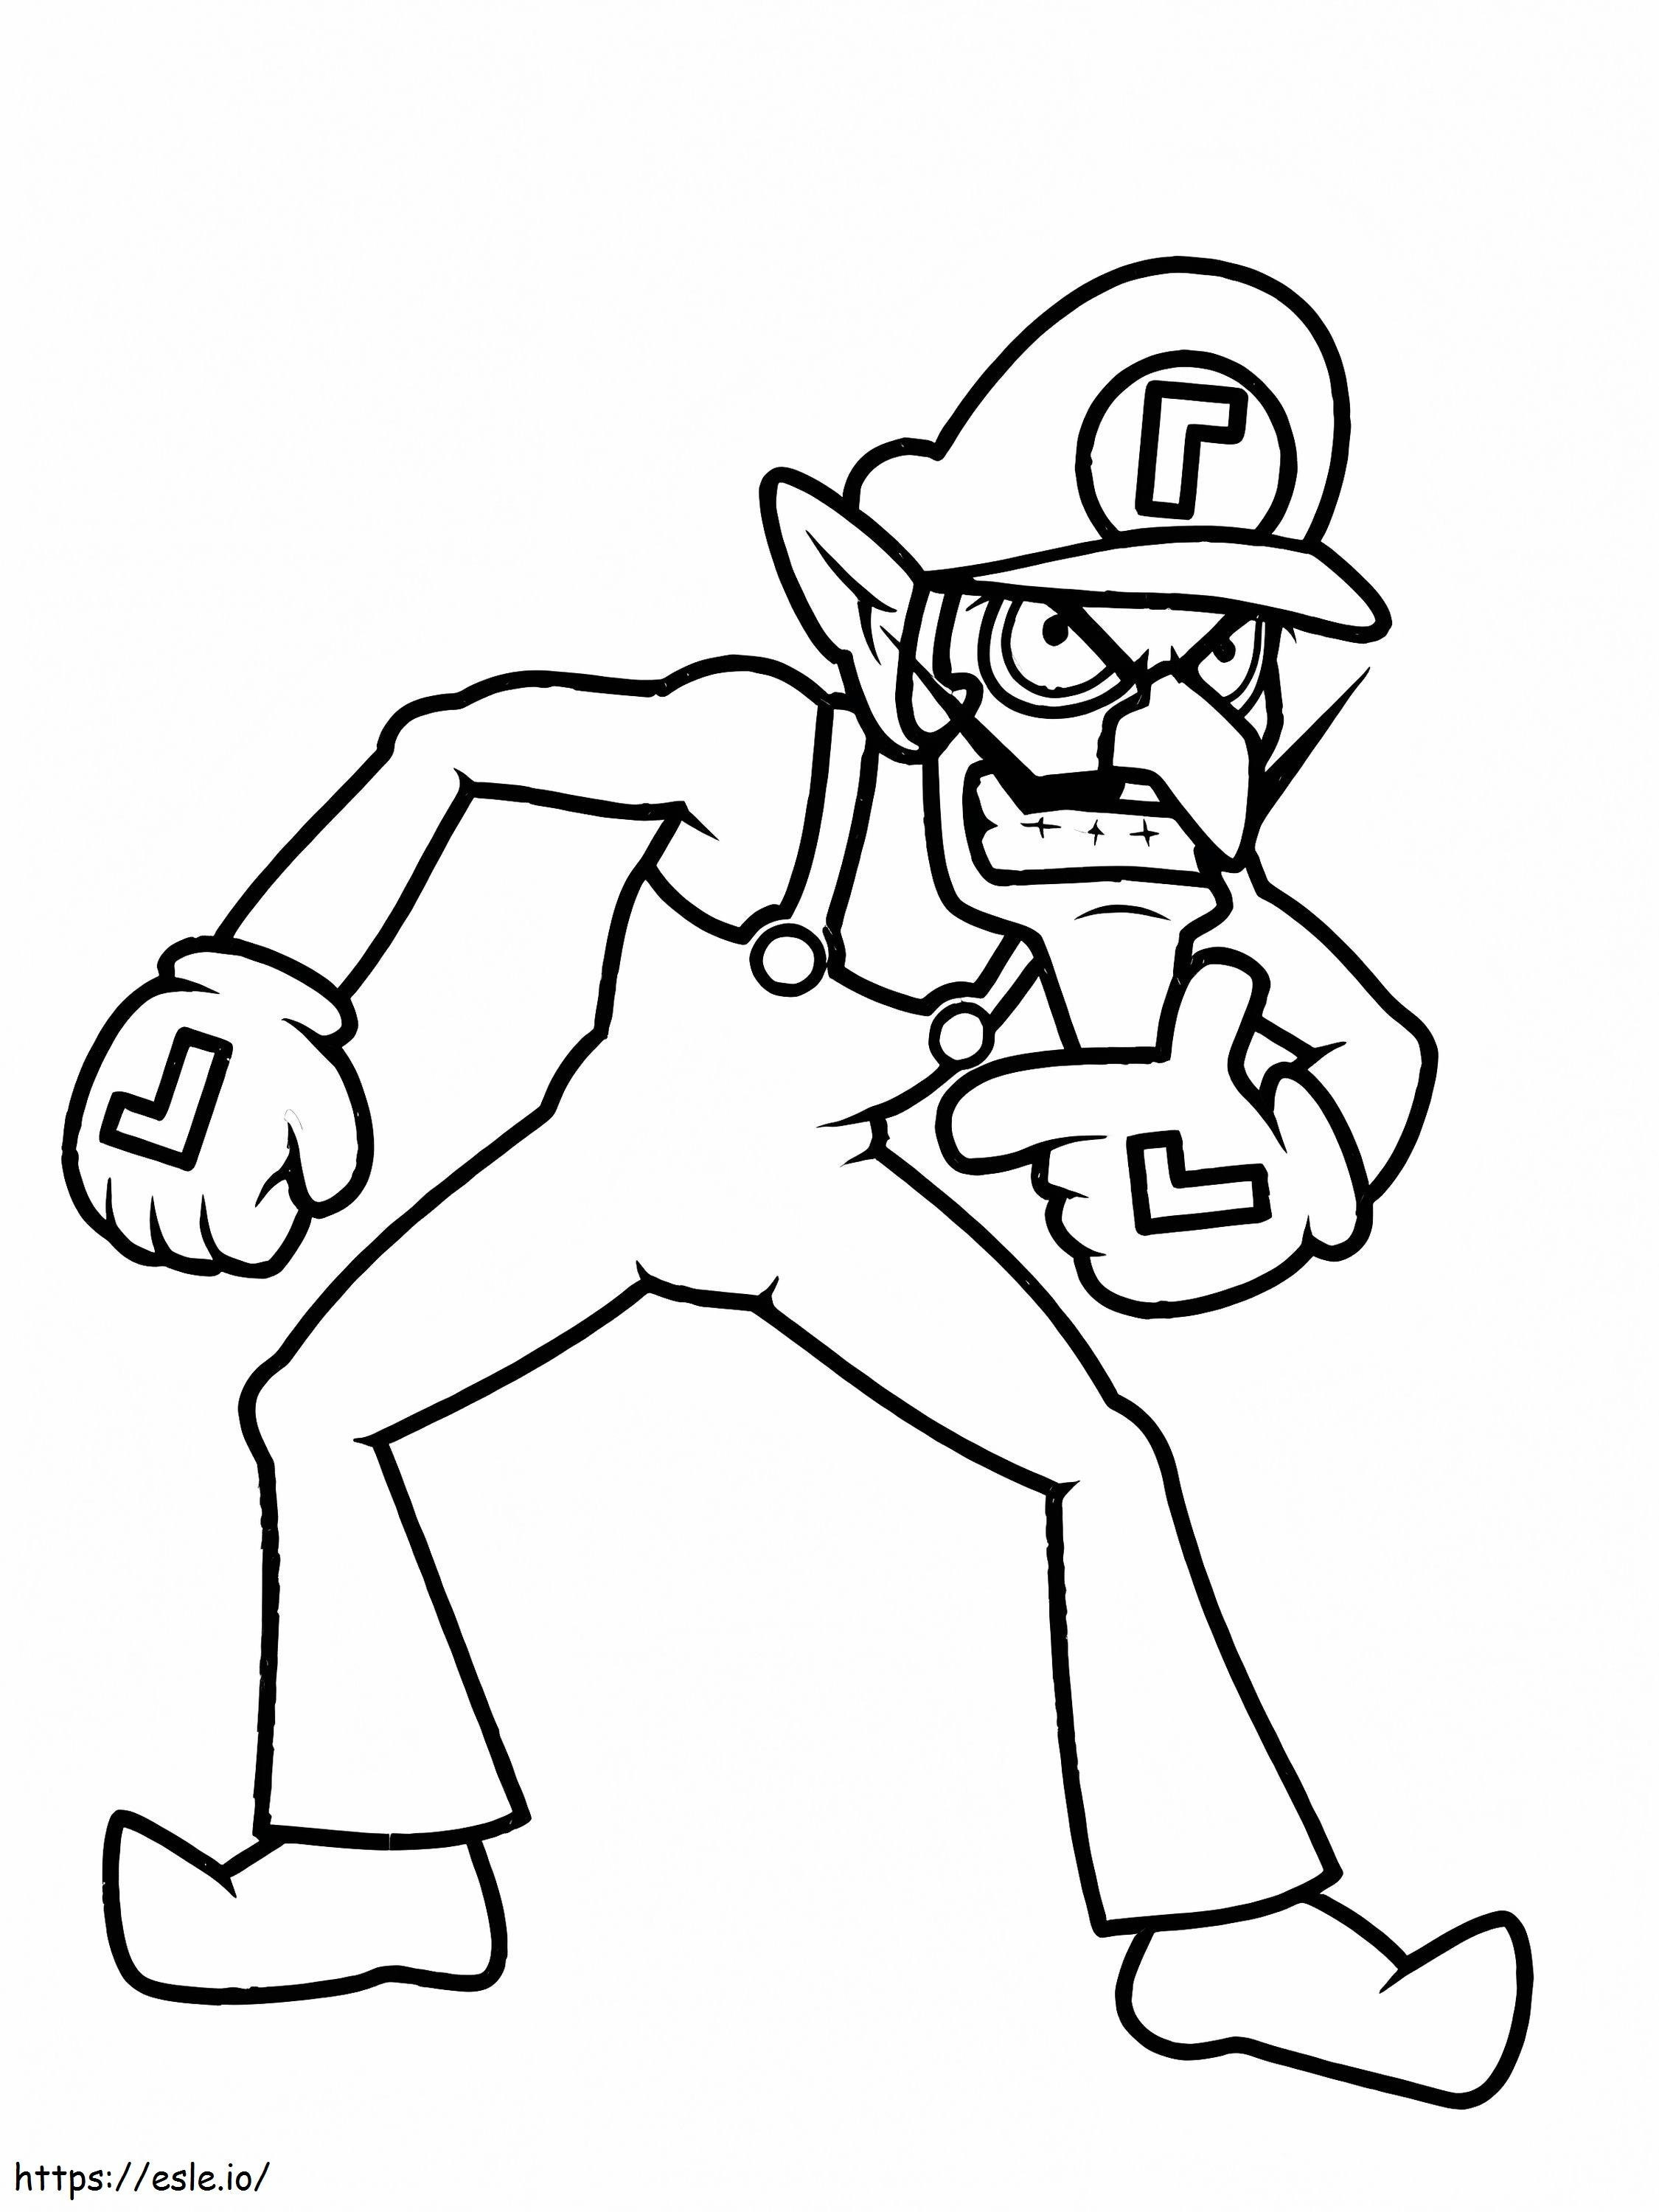 Coloriage Waluigi de Mario à imprimer dessin